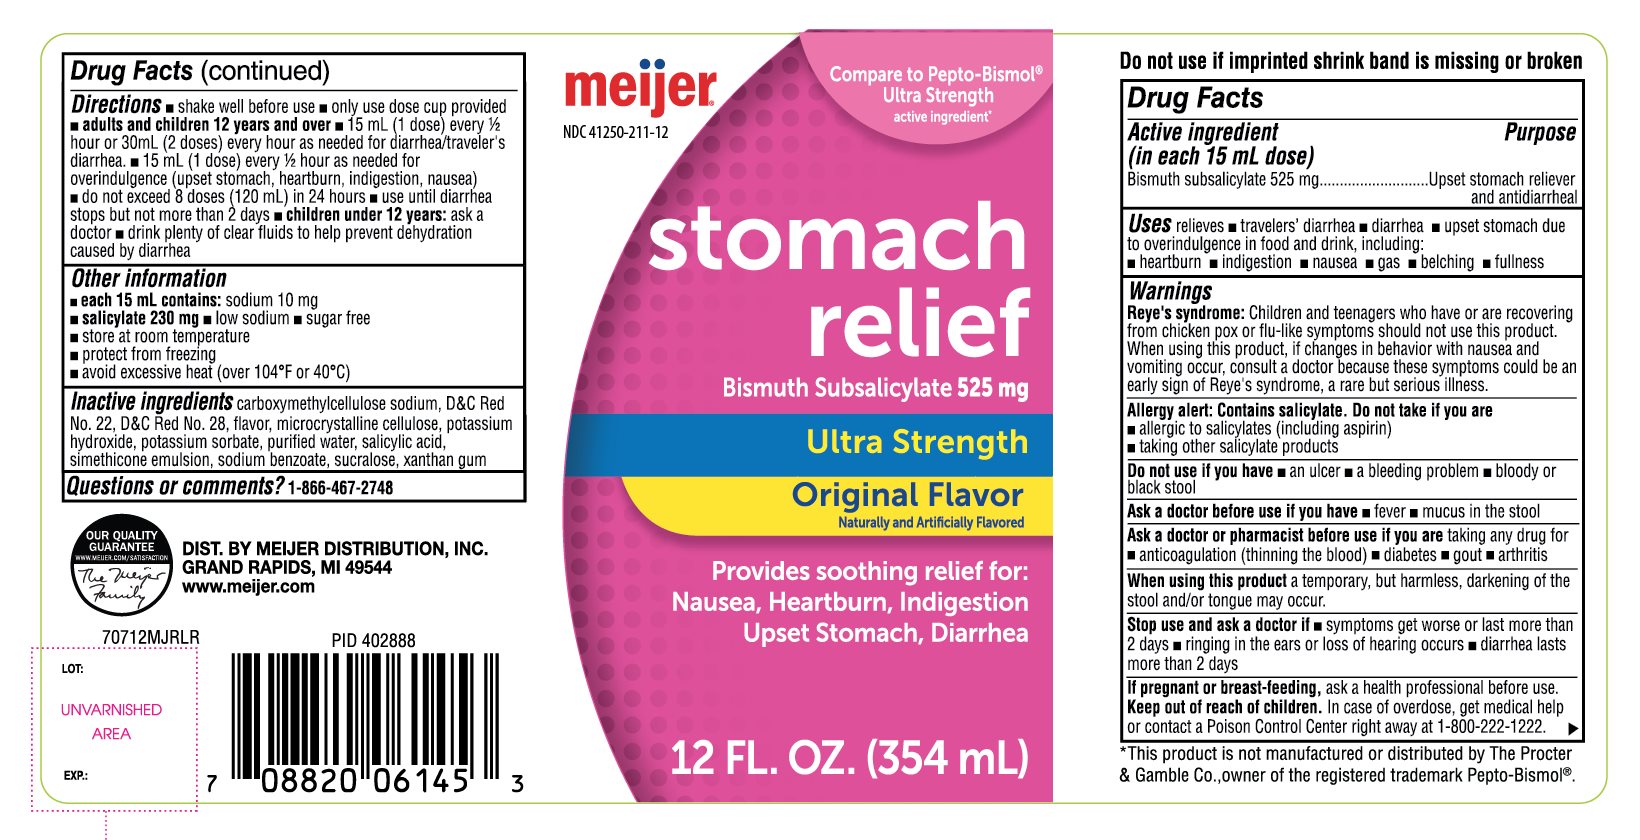 meijer stomach relief Ultra Strength original flavor